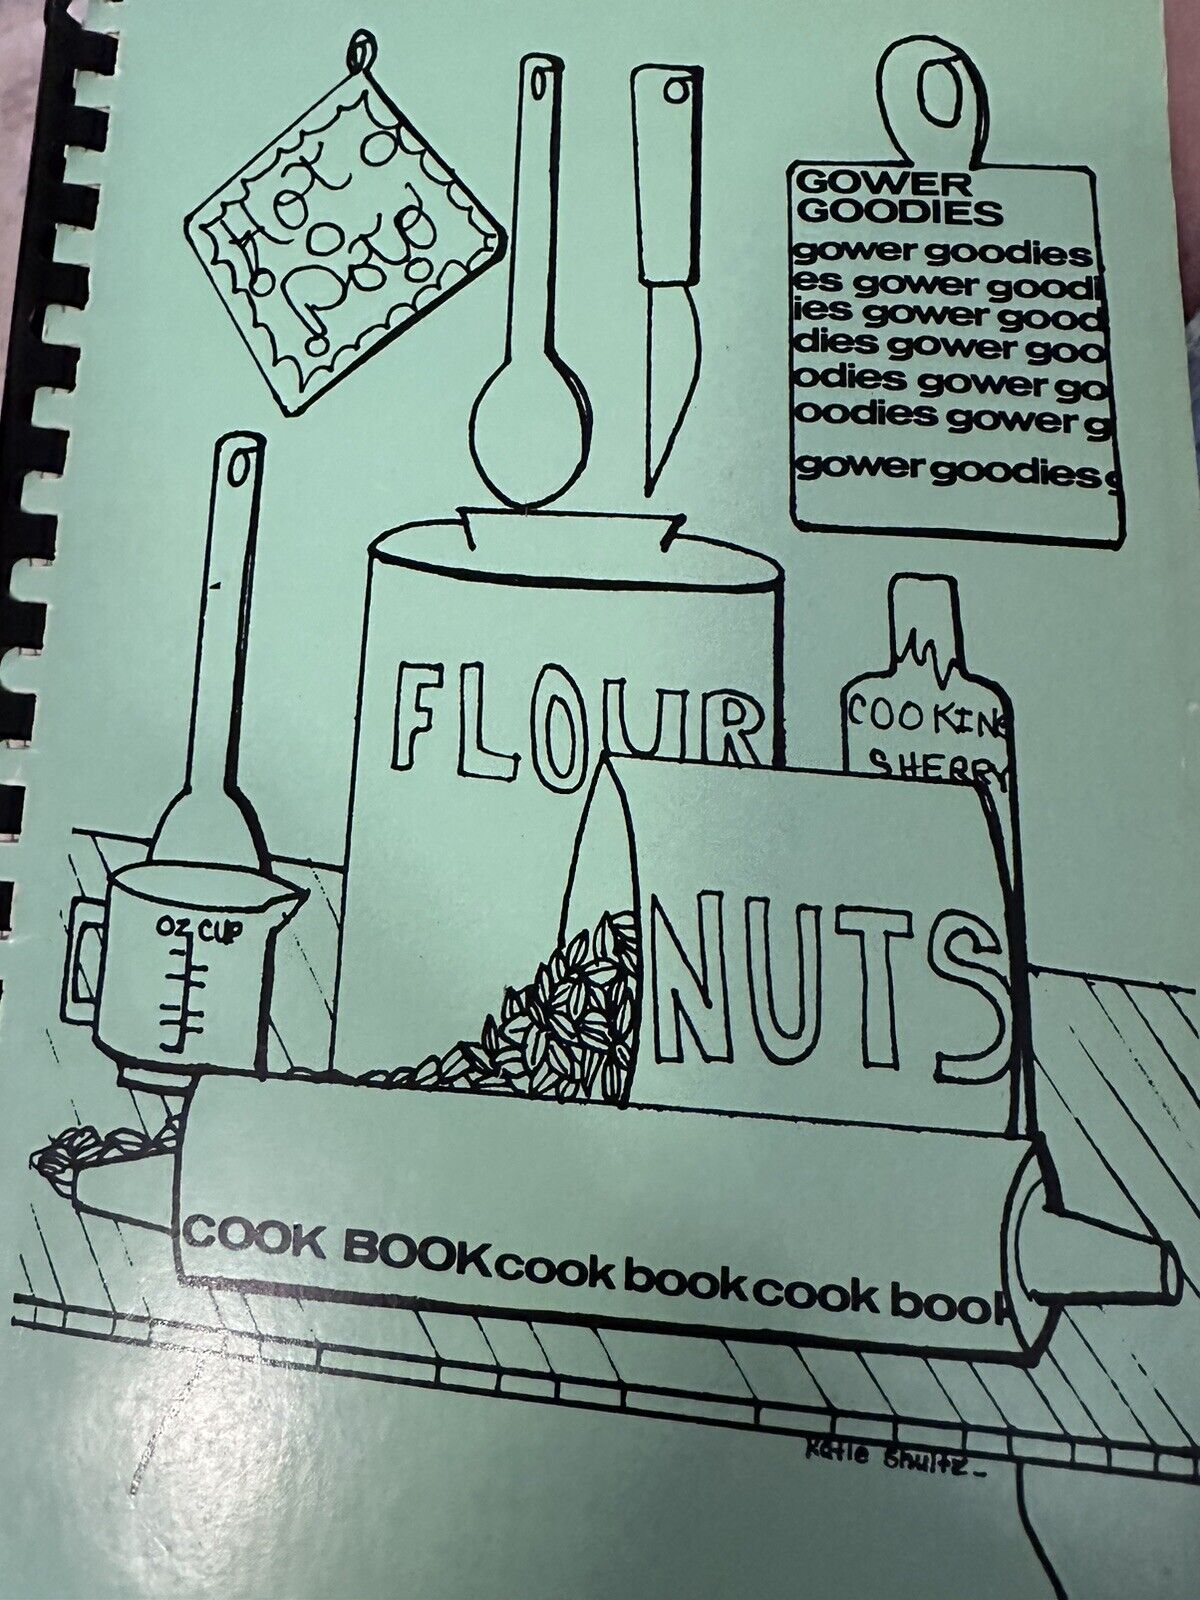 VTG ‘77 Gower Goodies School Disctrict #62 PTO Community Cookbook Willowbrook IL